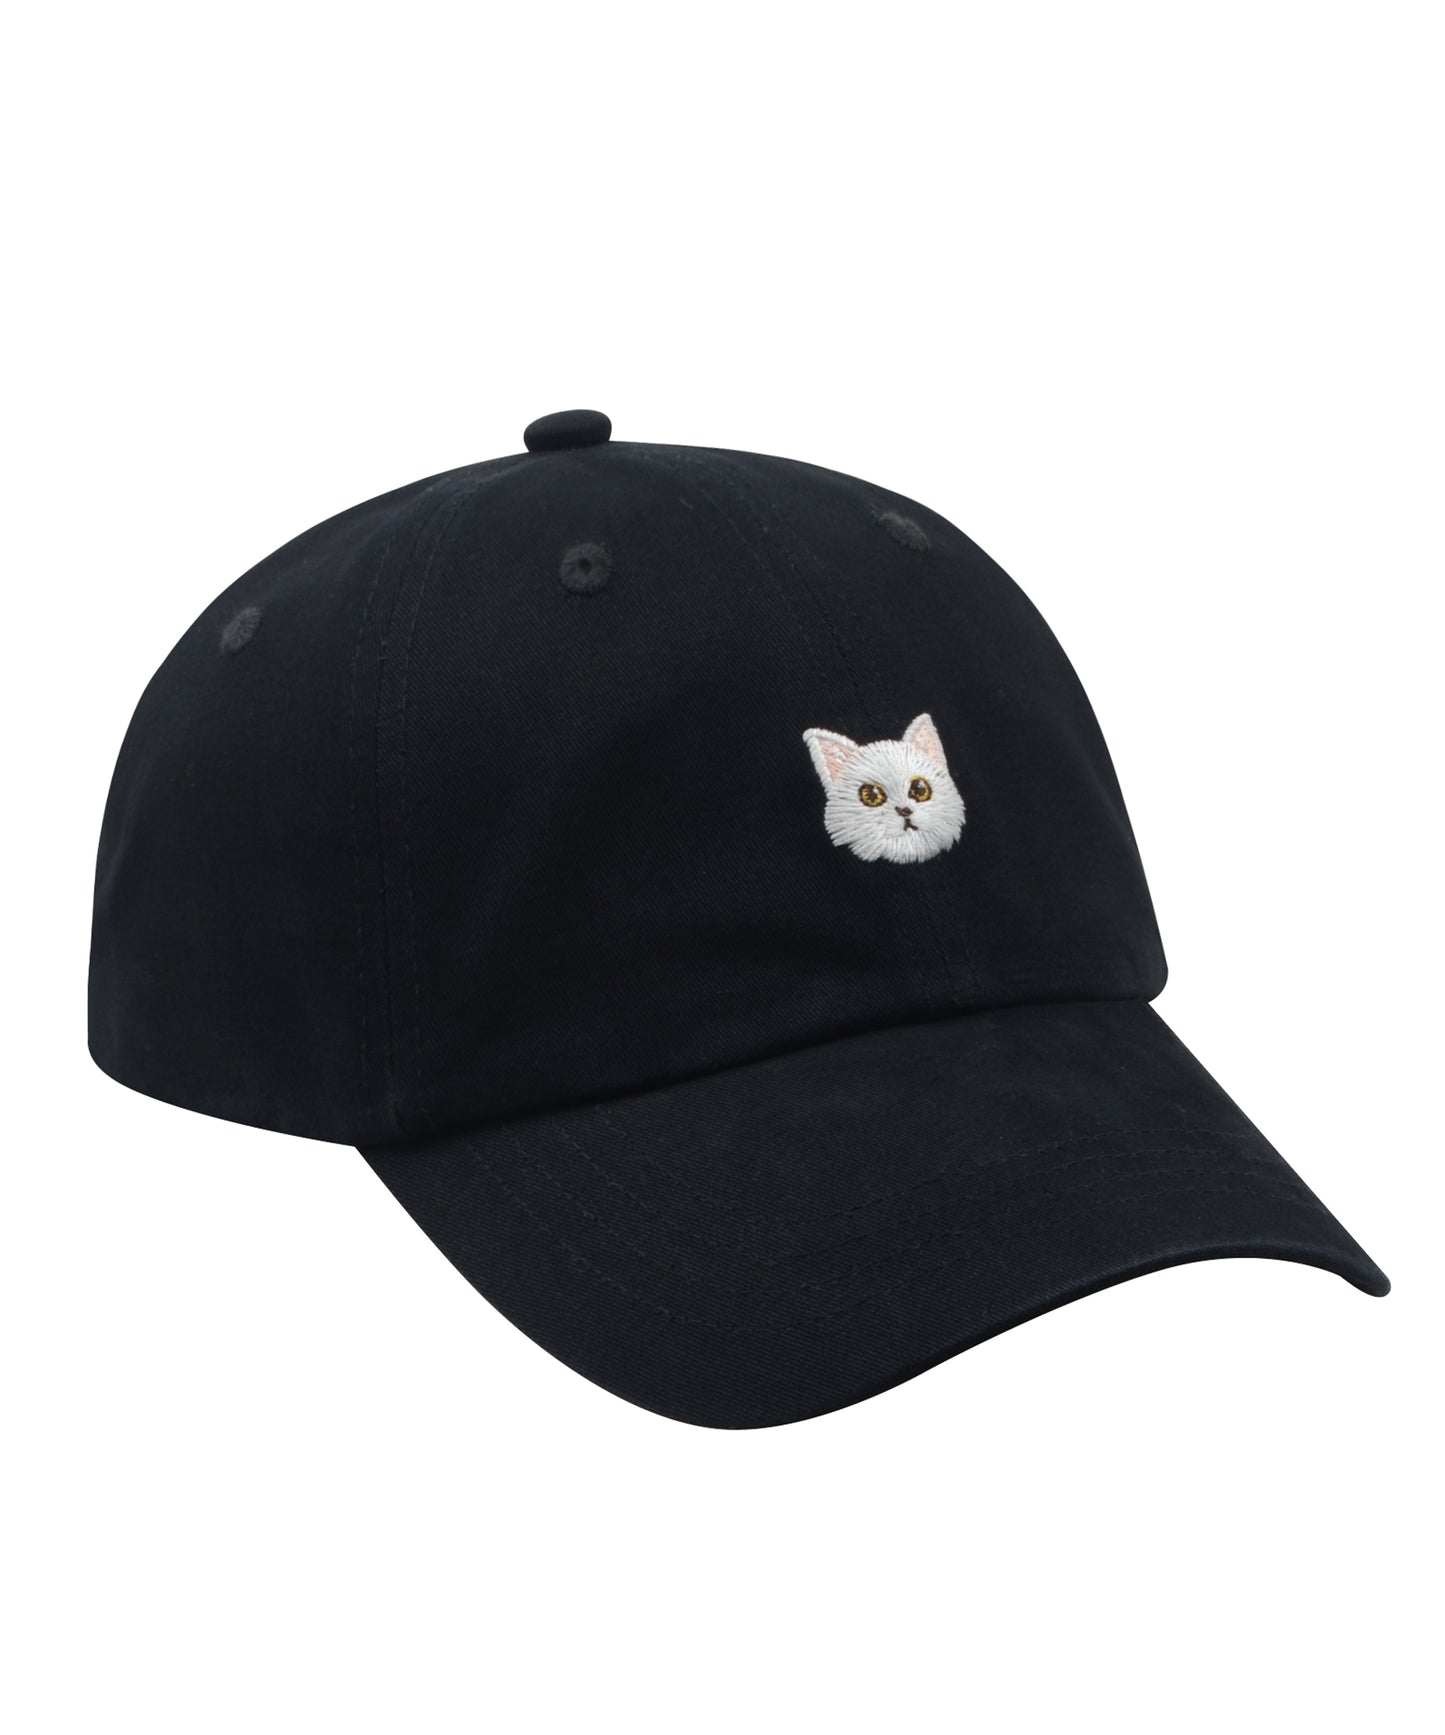 White Cat Baseball Cap